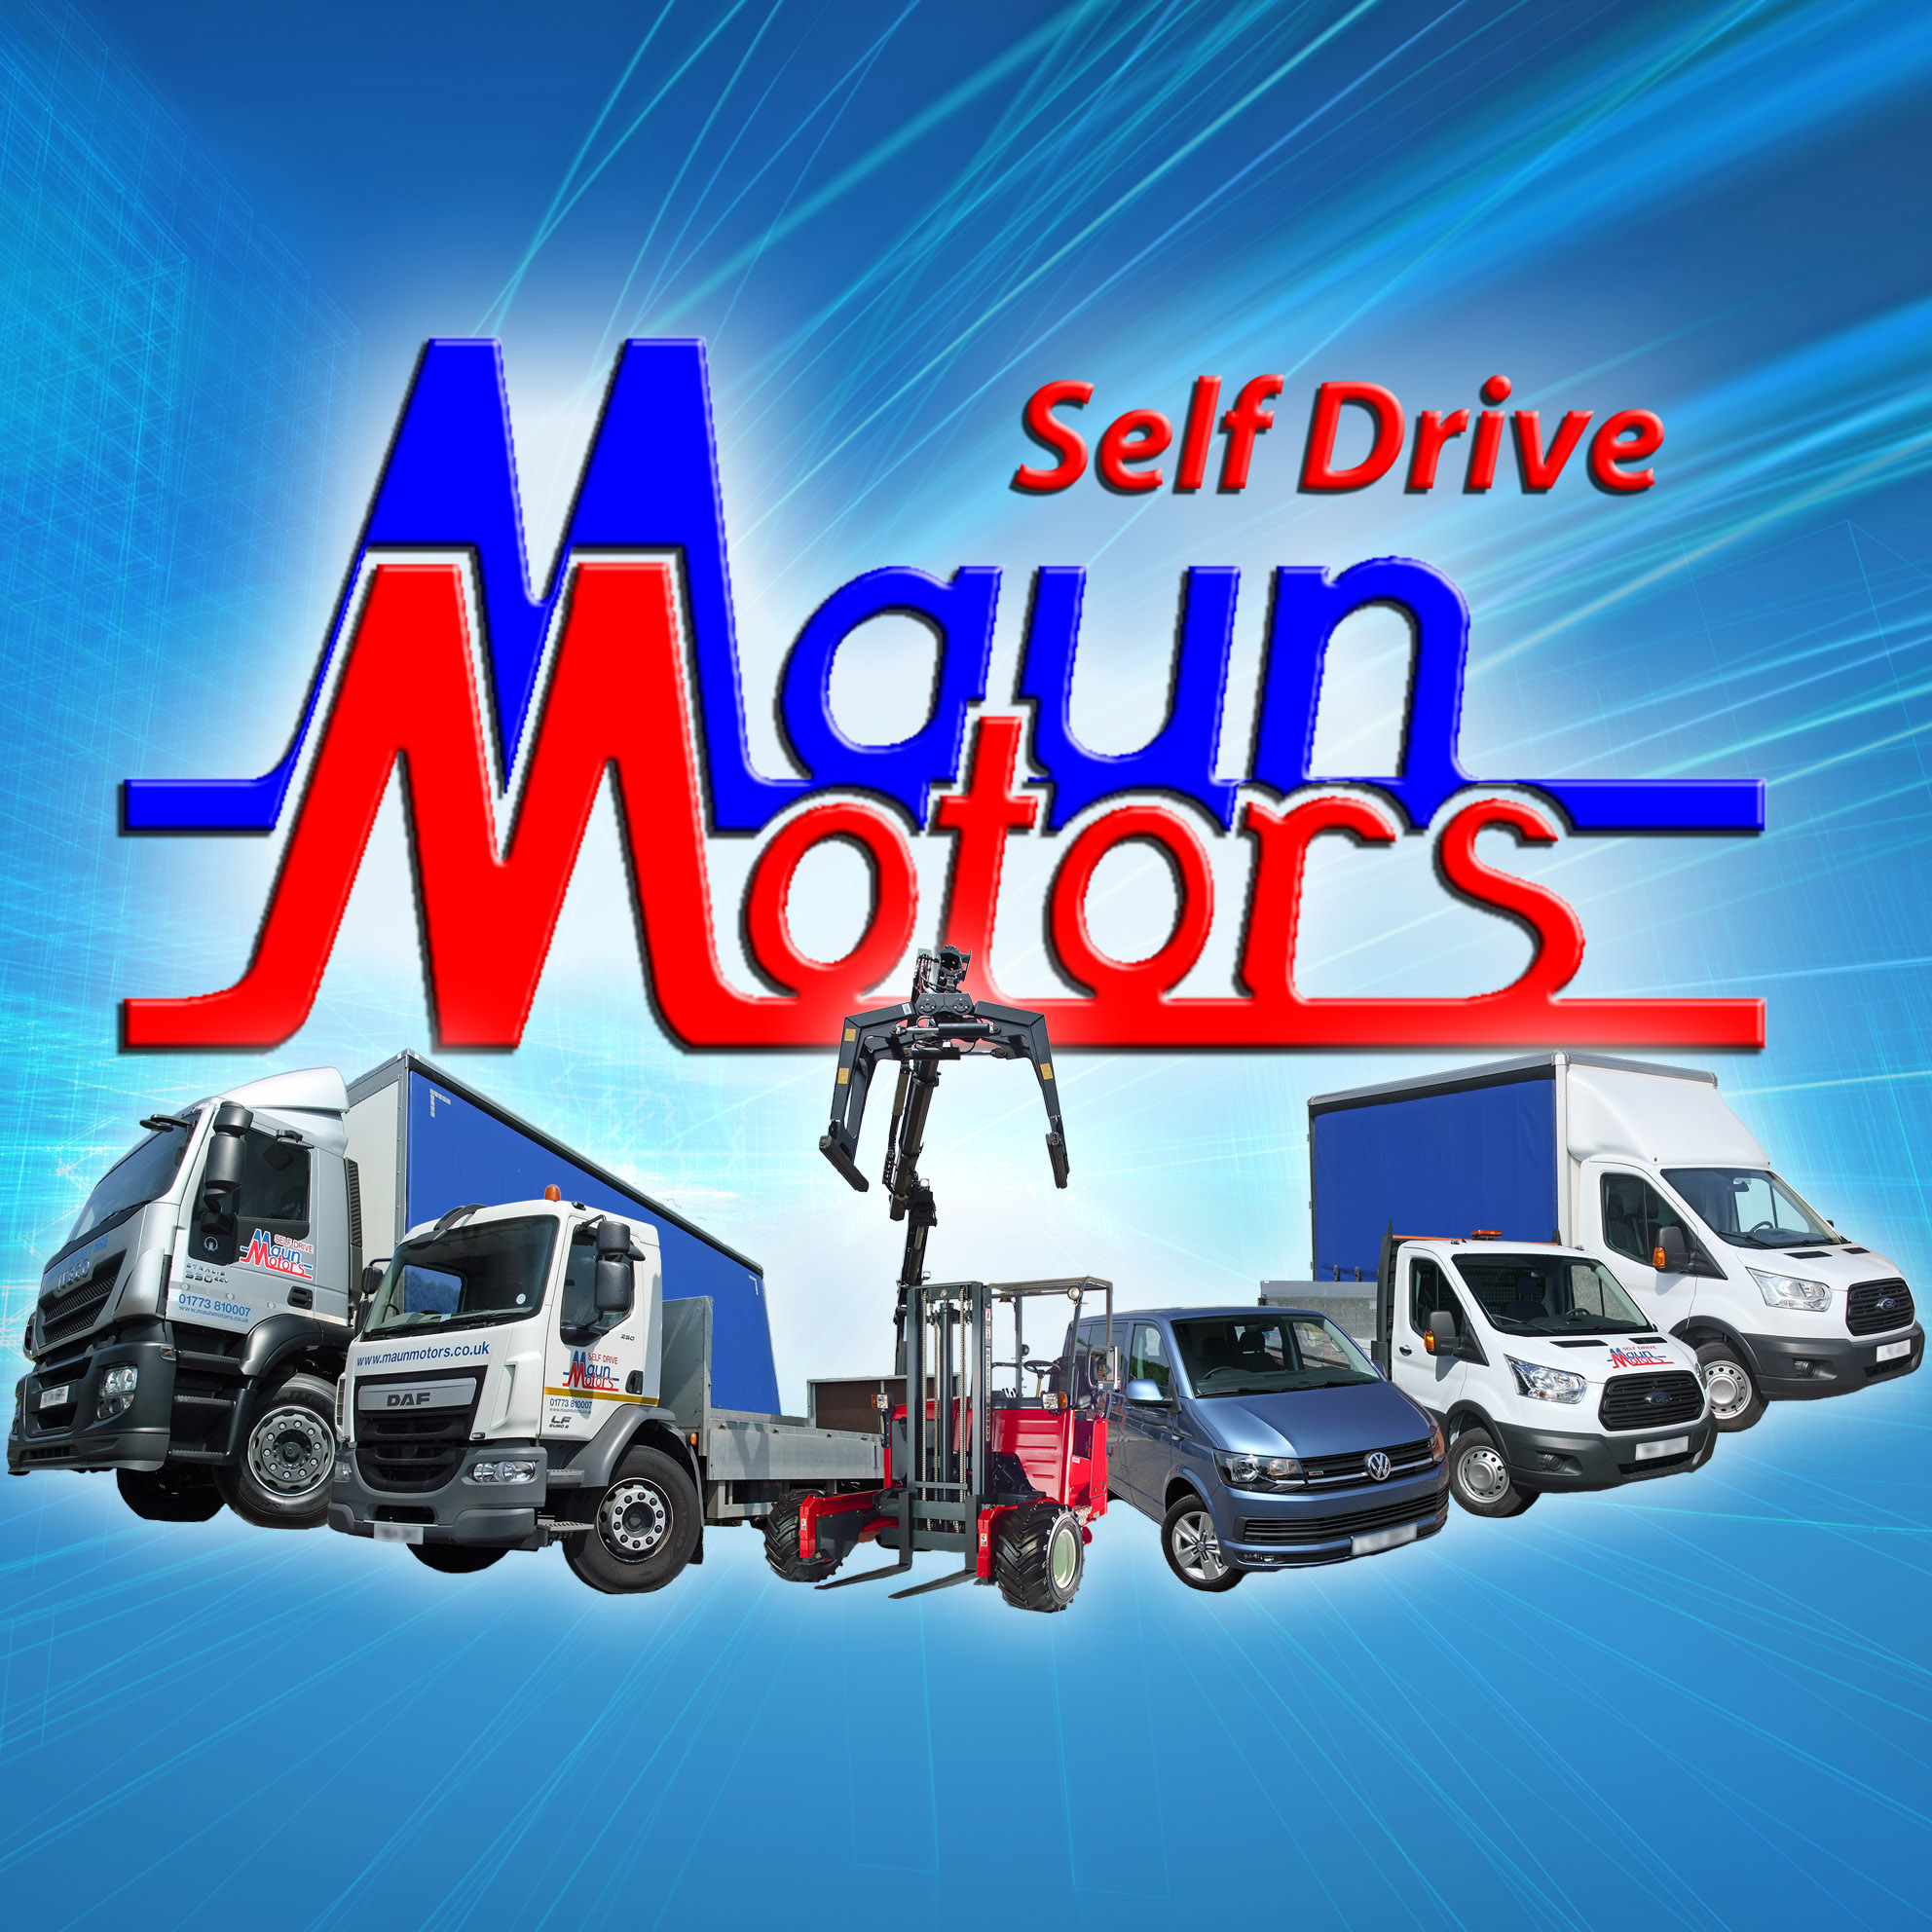 Maun Motors Self Drive Limited